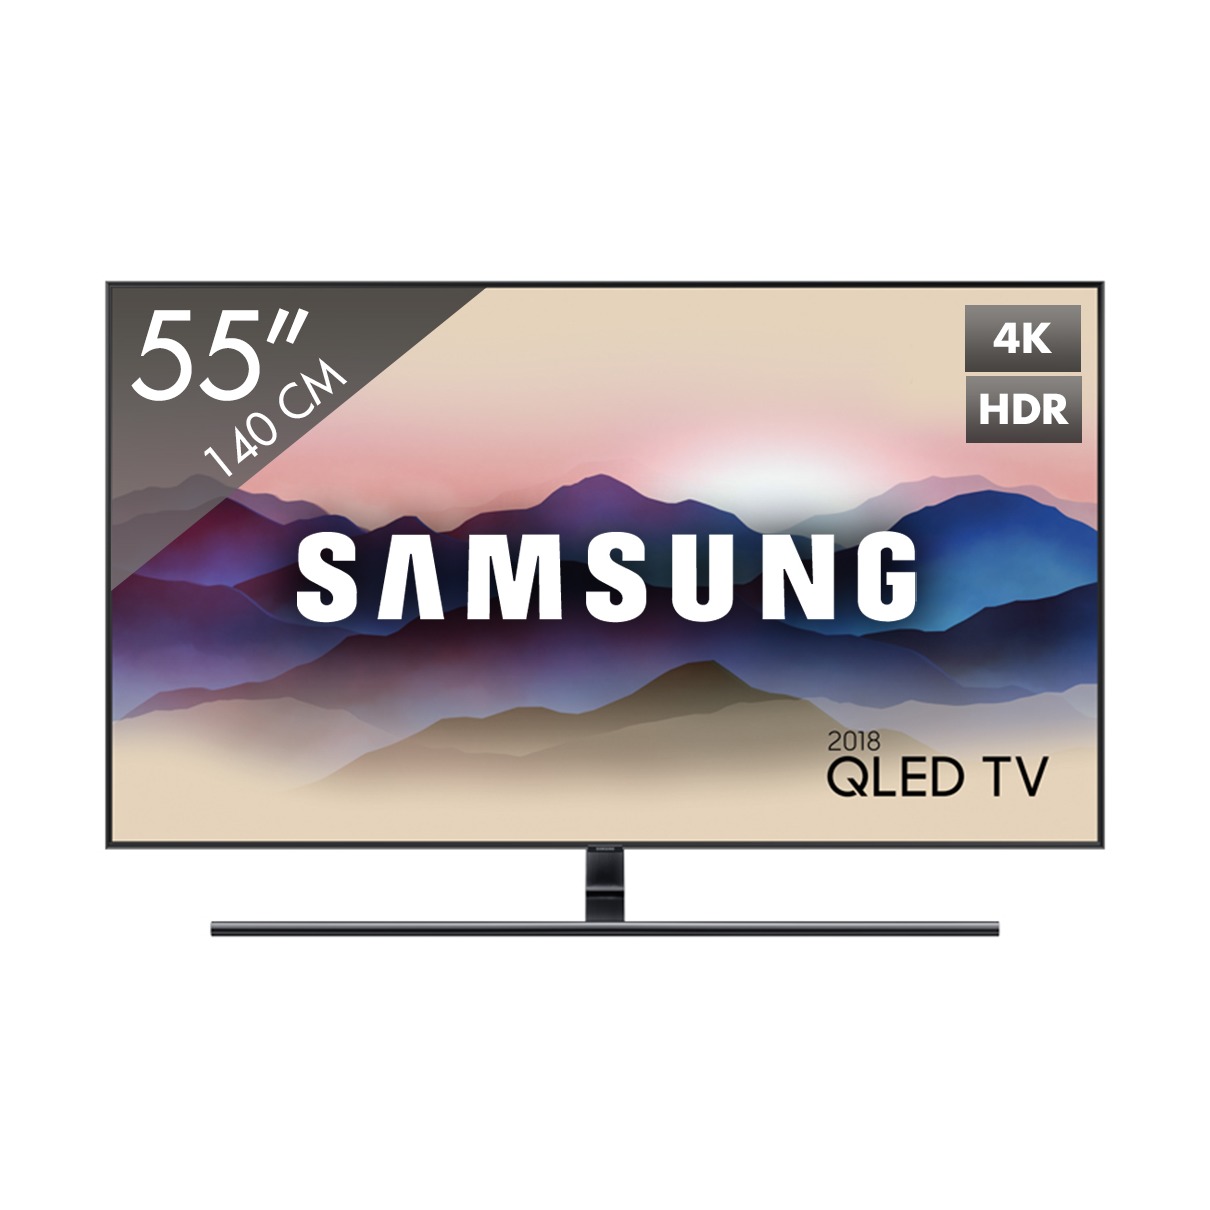 Telefoonleader - Samsung QE55Q9F QLED TV 2018